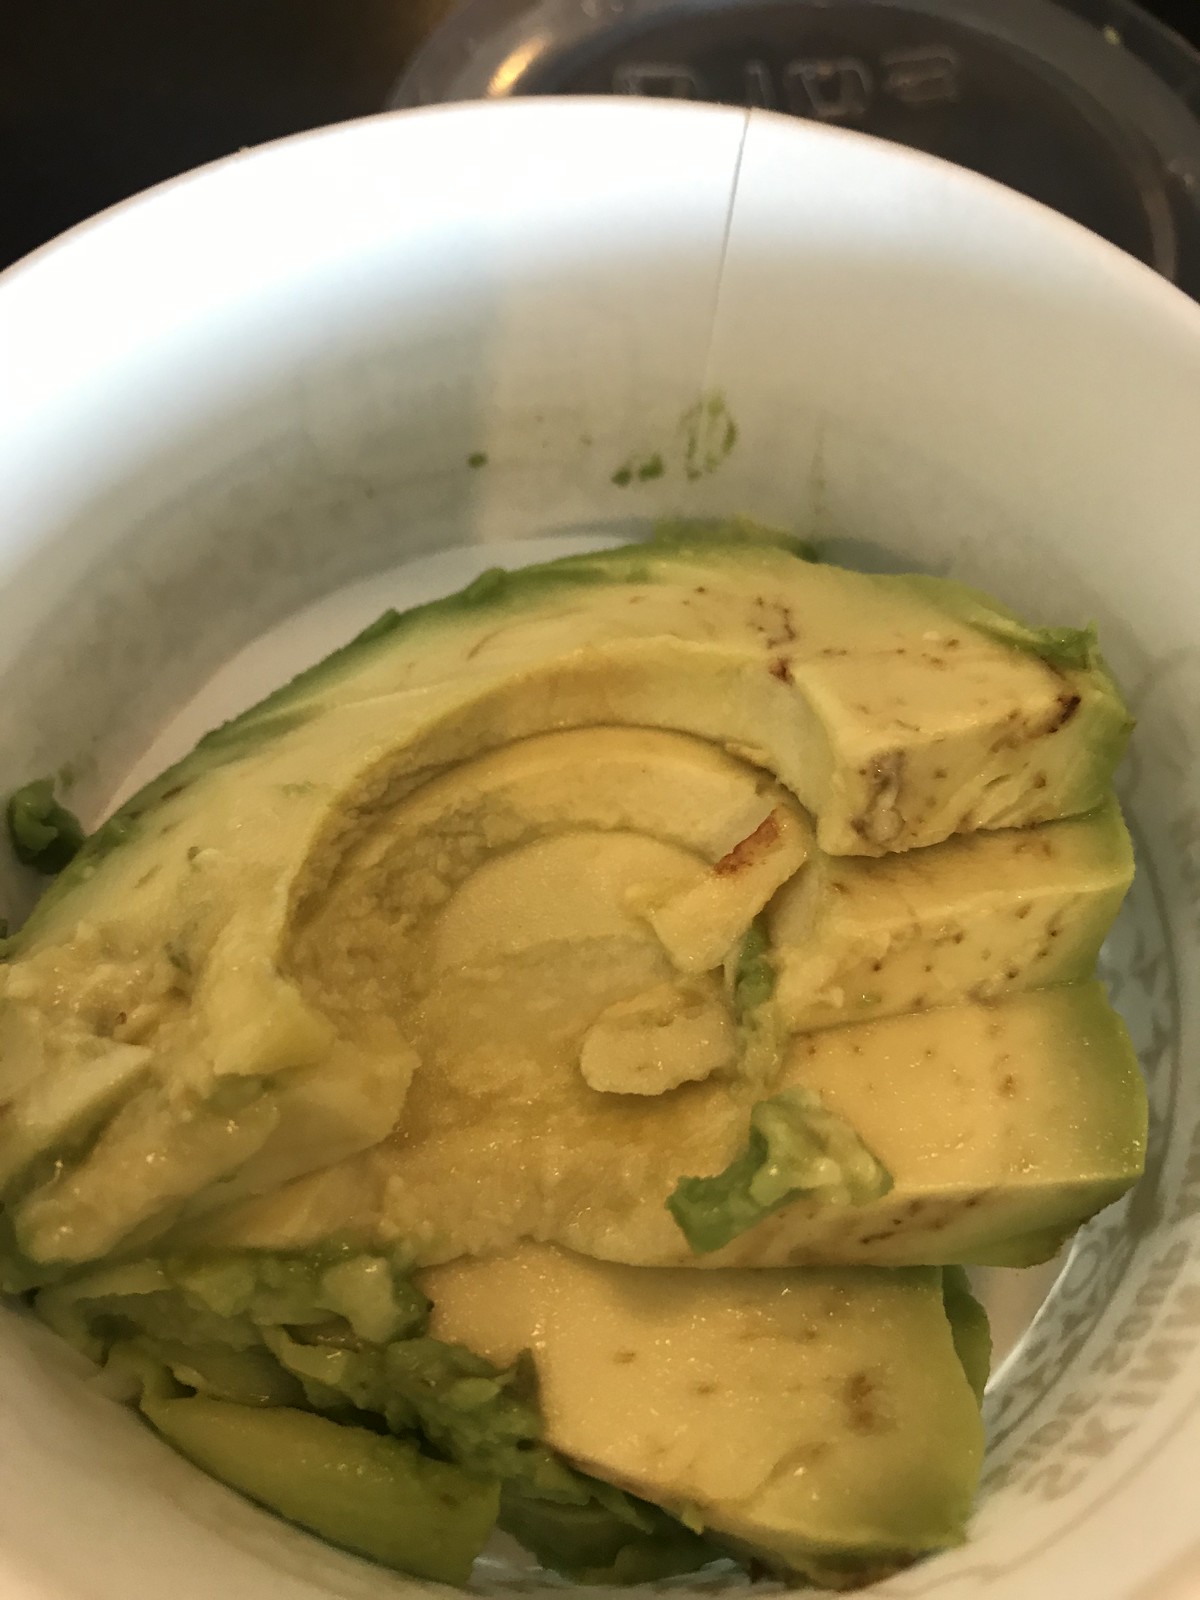 Rent or Avocado? Avocado of course! - Image of sliced avocado in a white bowl